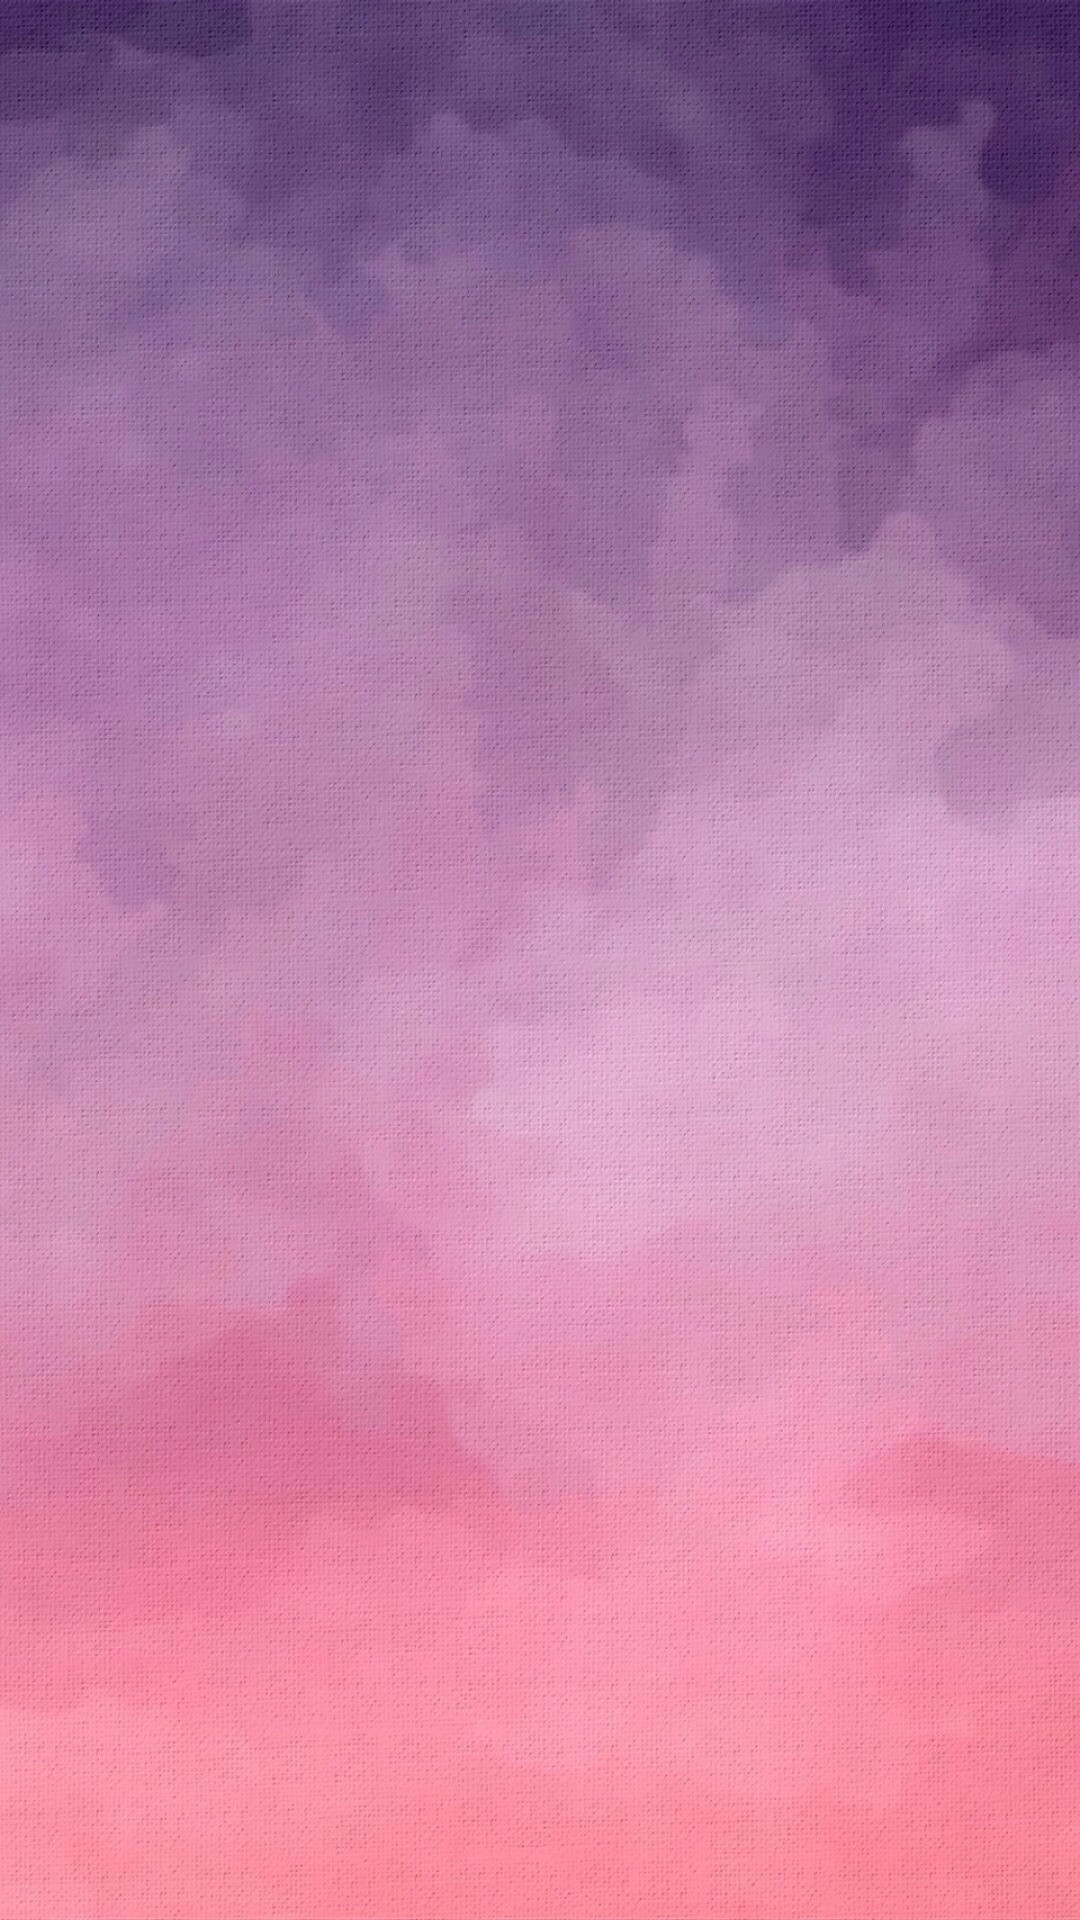 1080x1920 Free Cute Phone Wallpapers Backgrounds | PixelsTalk.Net